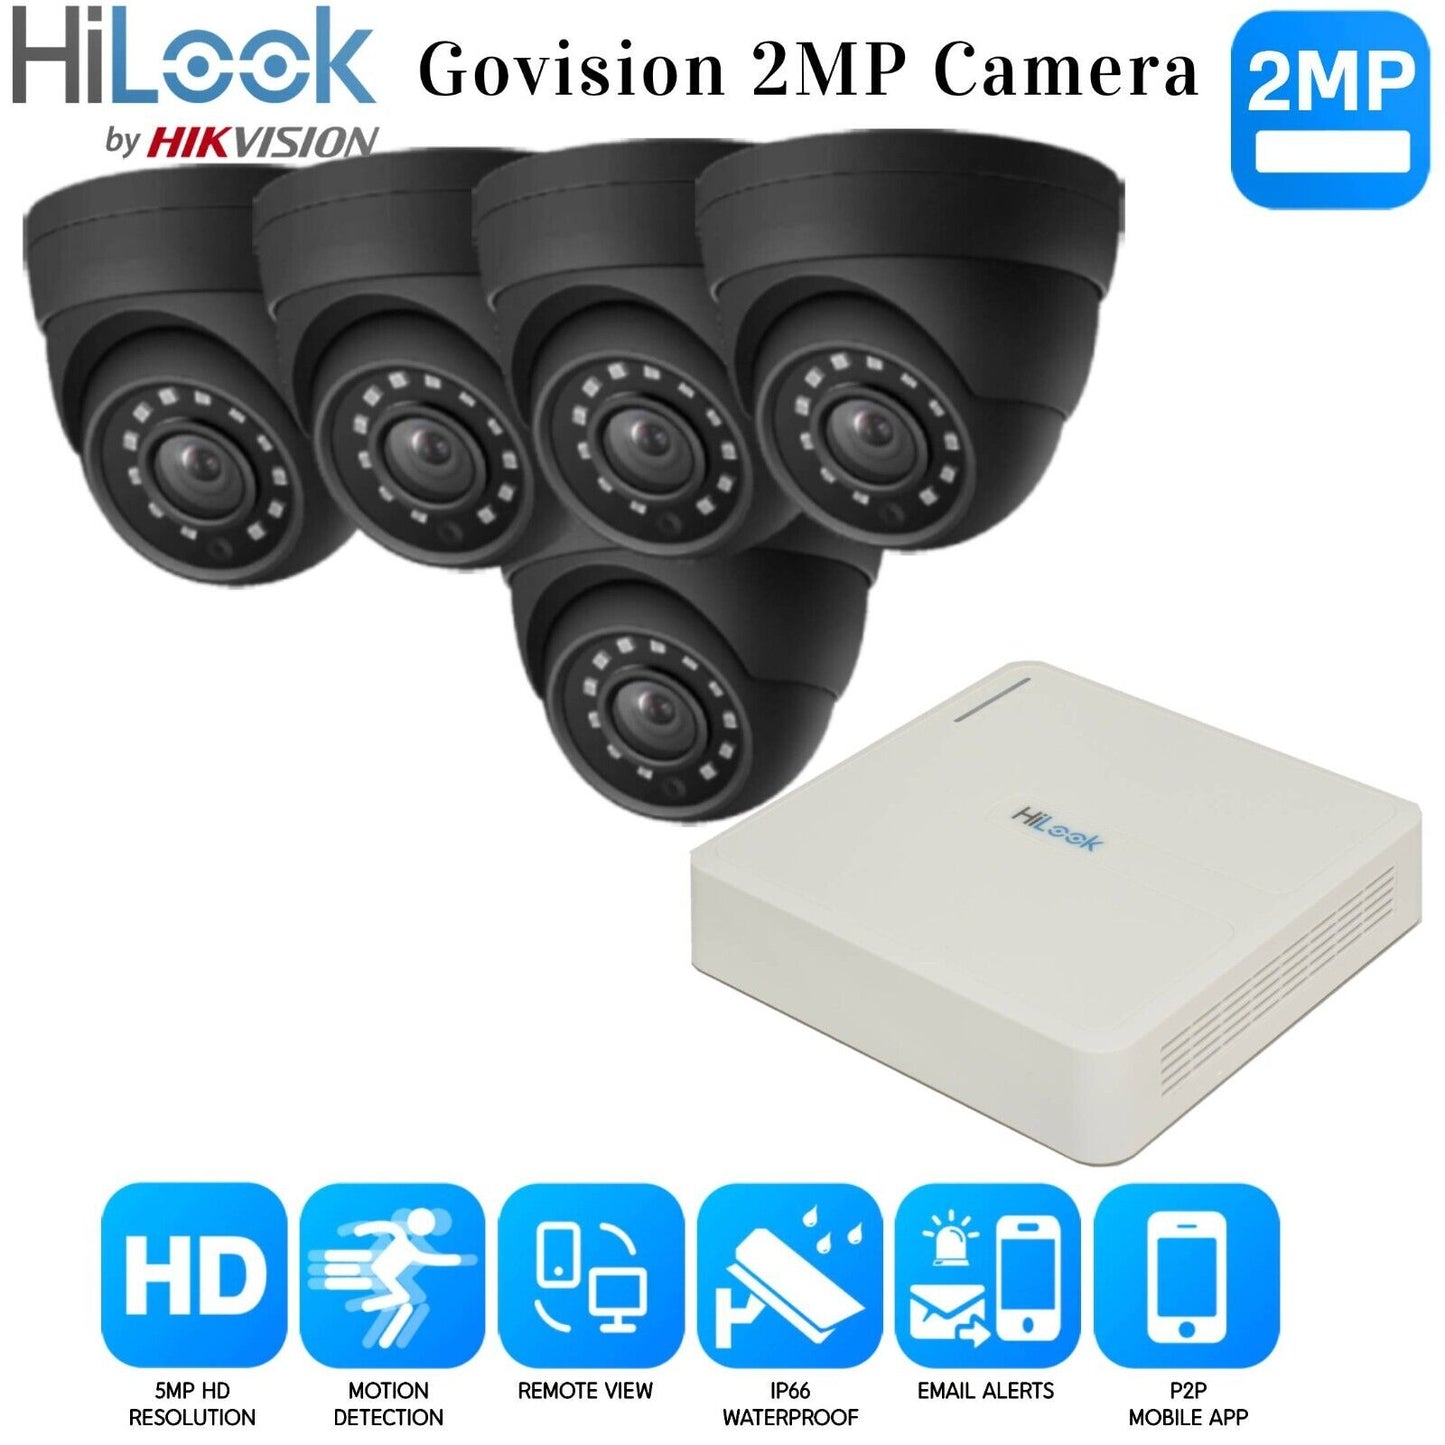 Hikvision Home Outdoor CCTV Security Camera System Kit HD 1080P 4CH DVR IR NIGHT 8CH DVR 5xCameras (gray) 1TB HDD